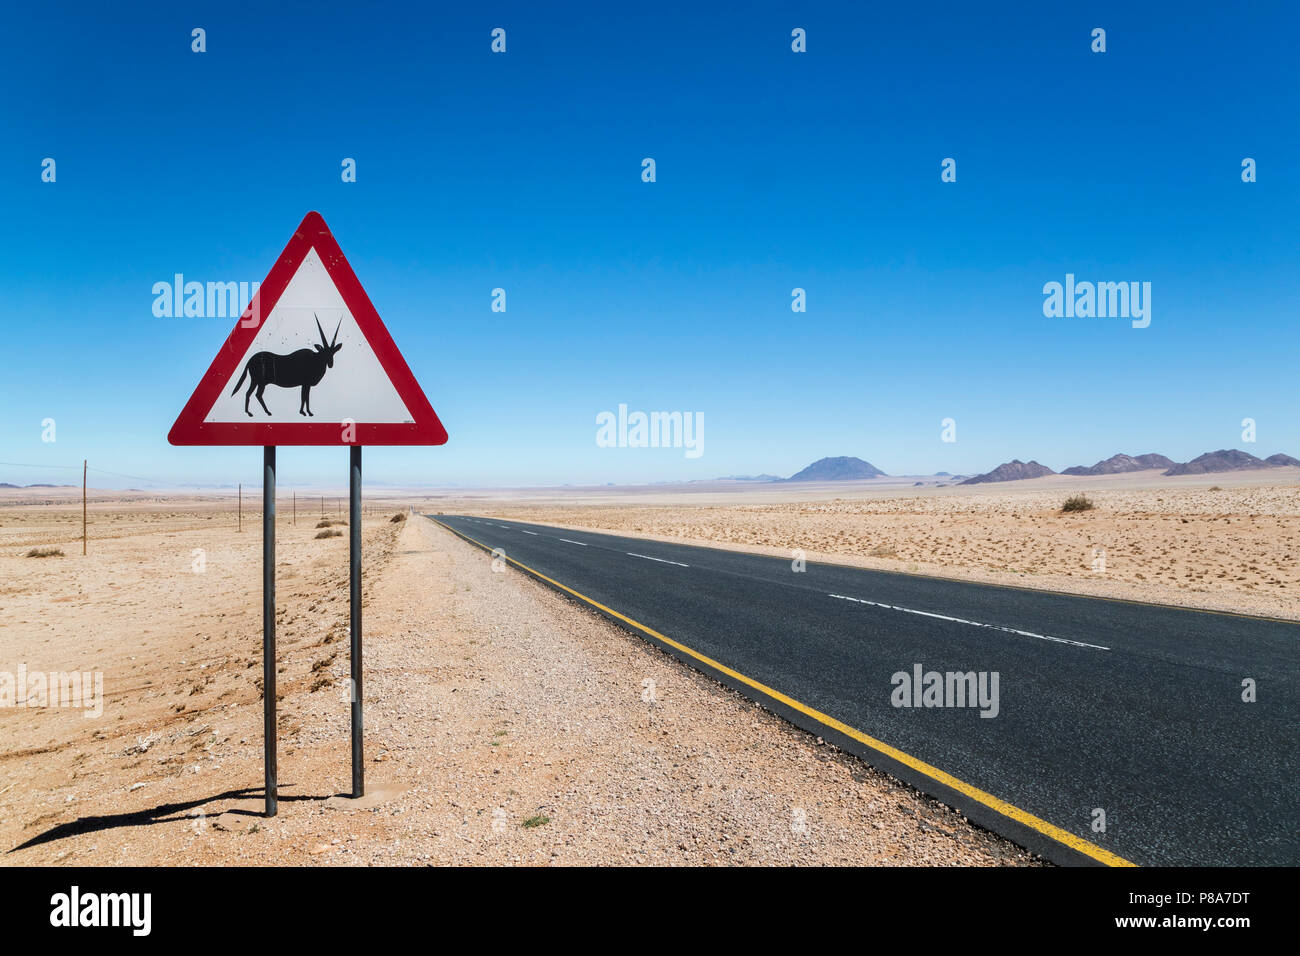 Road sign warning of wild animals, Namibia, February 2017 Stock Photo